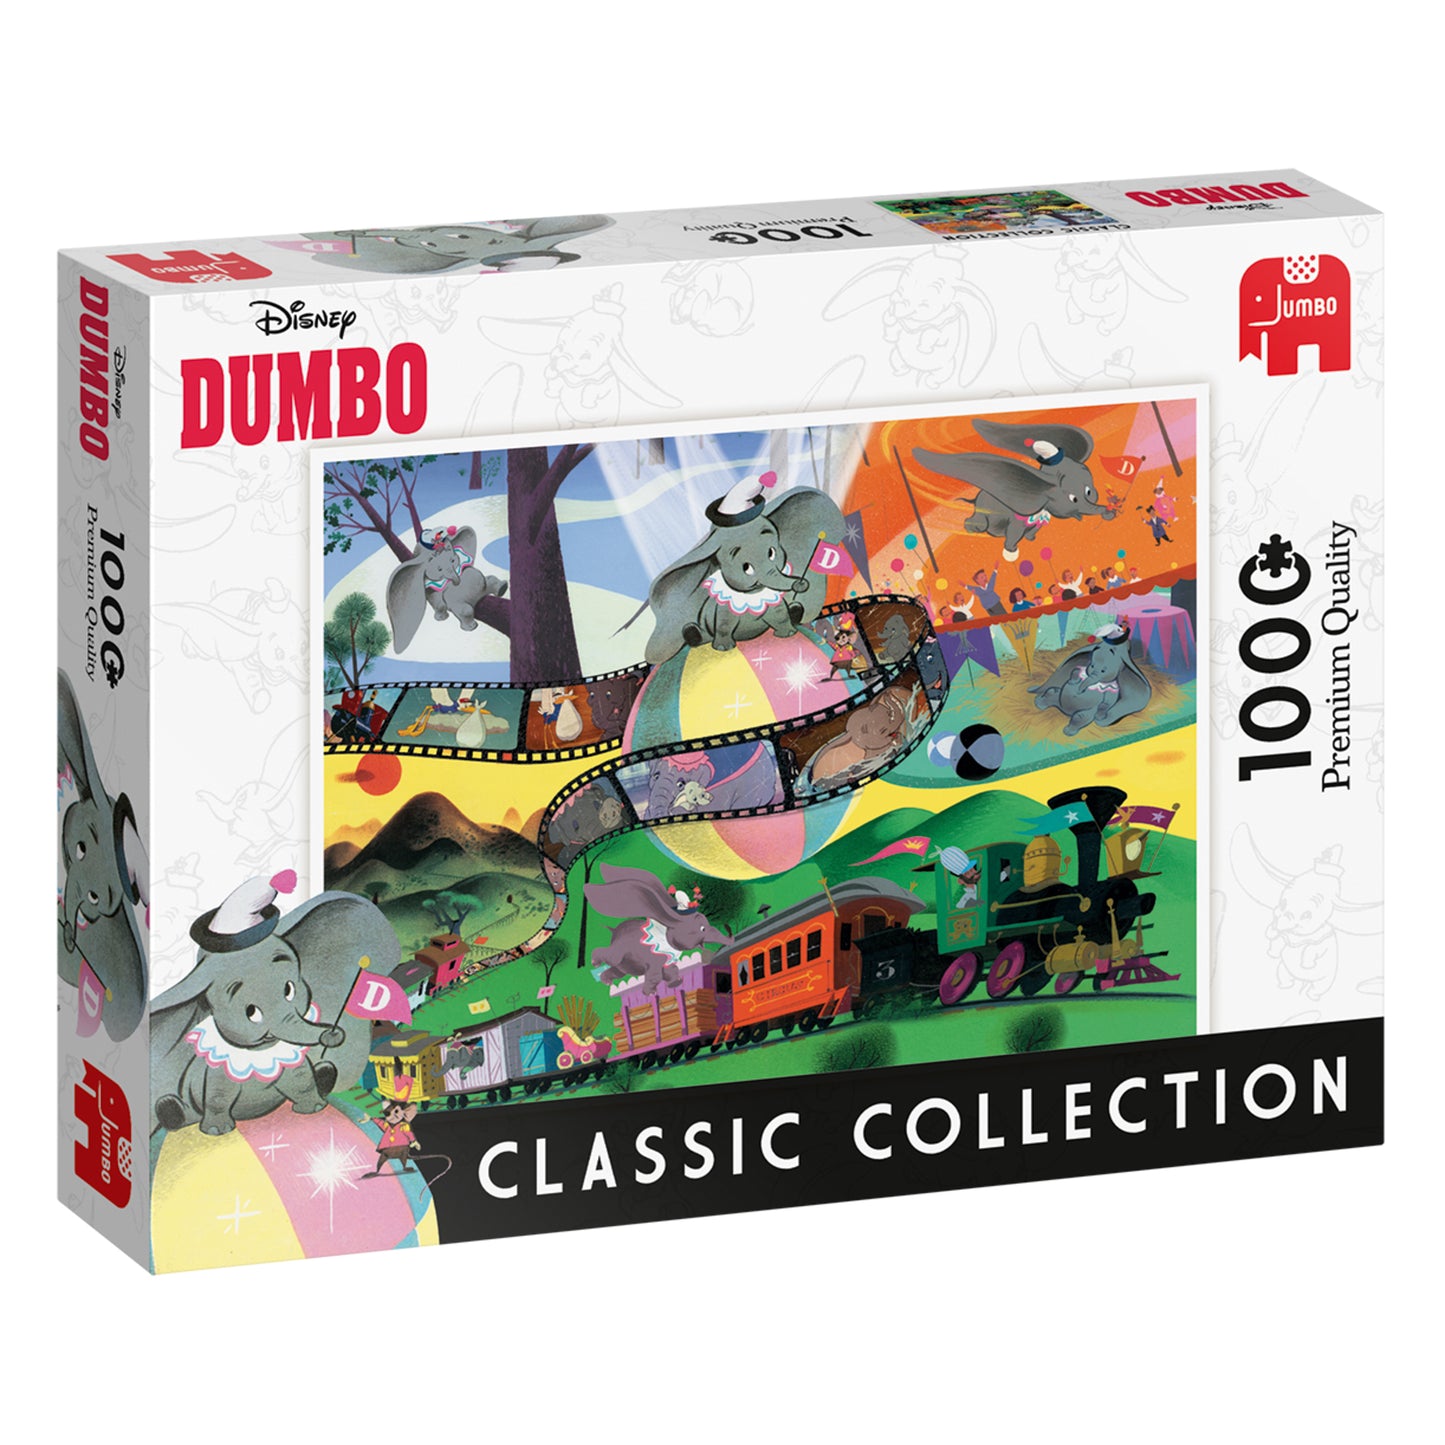 Disney Classic Collection - Dumbo (1000 pieces) - product image - Jumboplay.com